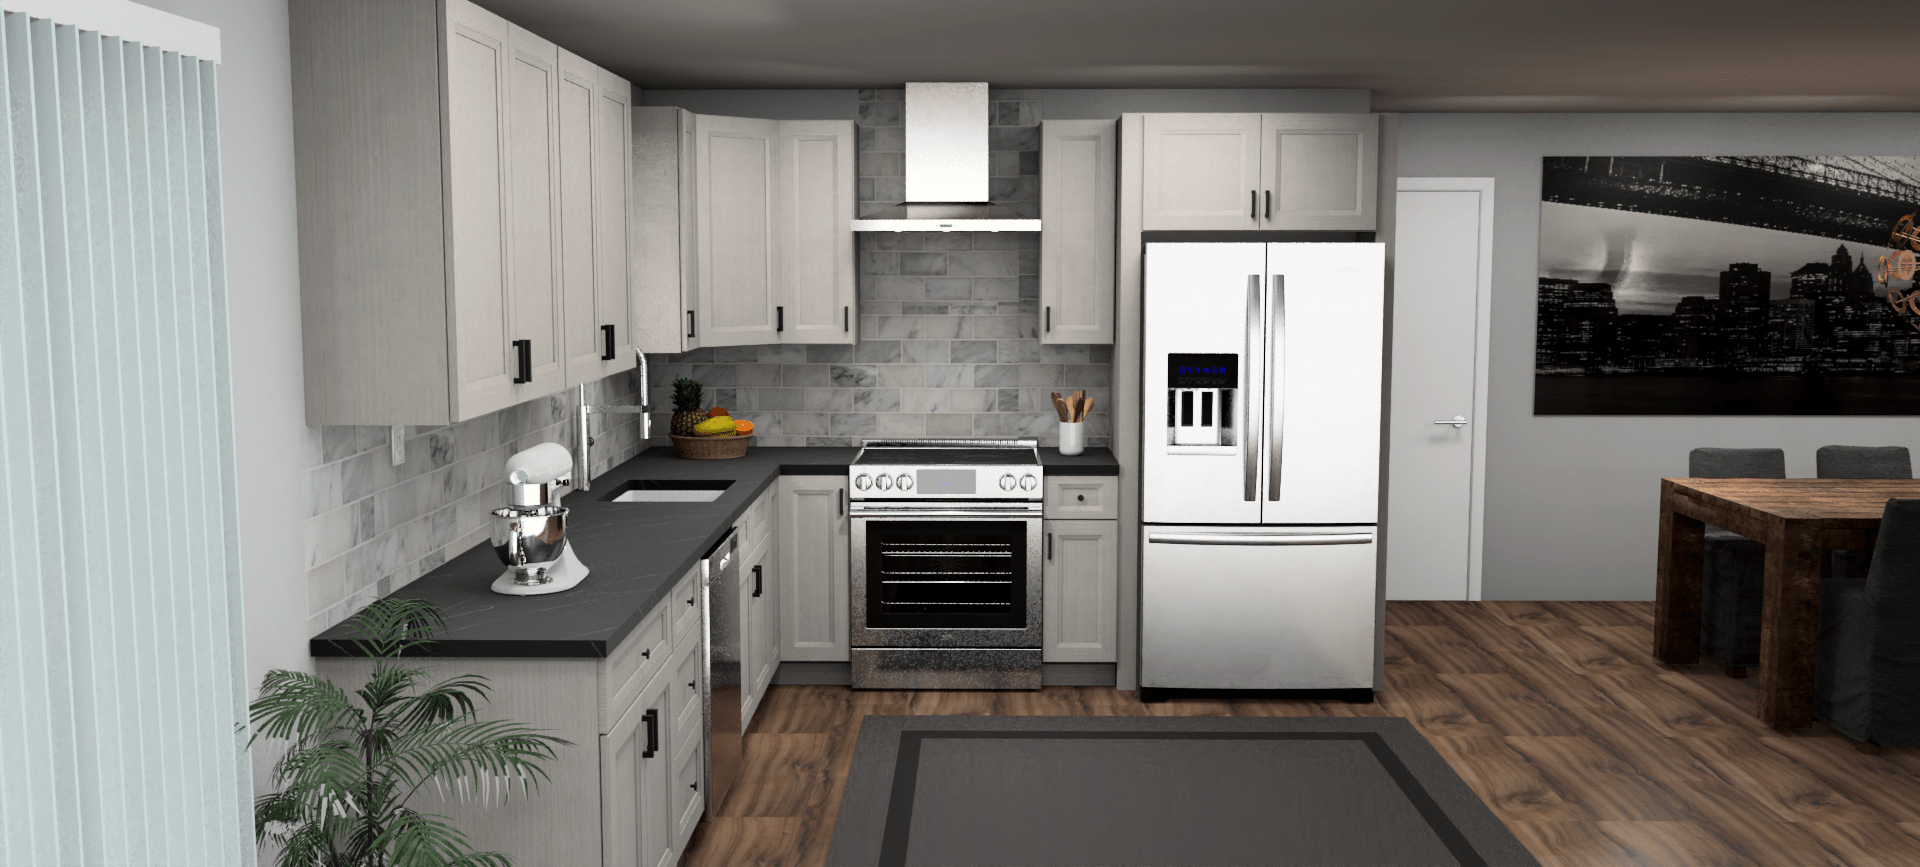 Fabuwood Allure Onyx Horizon 12 x 10 L Shaped Kitchen Front Layout Photo